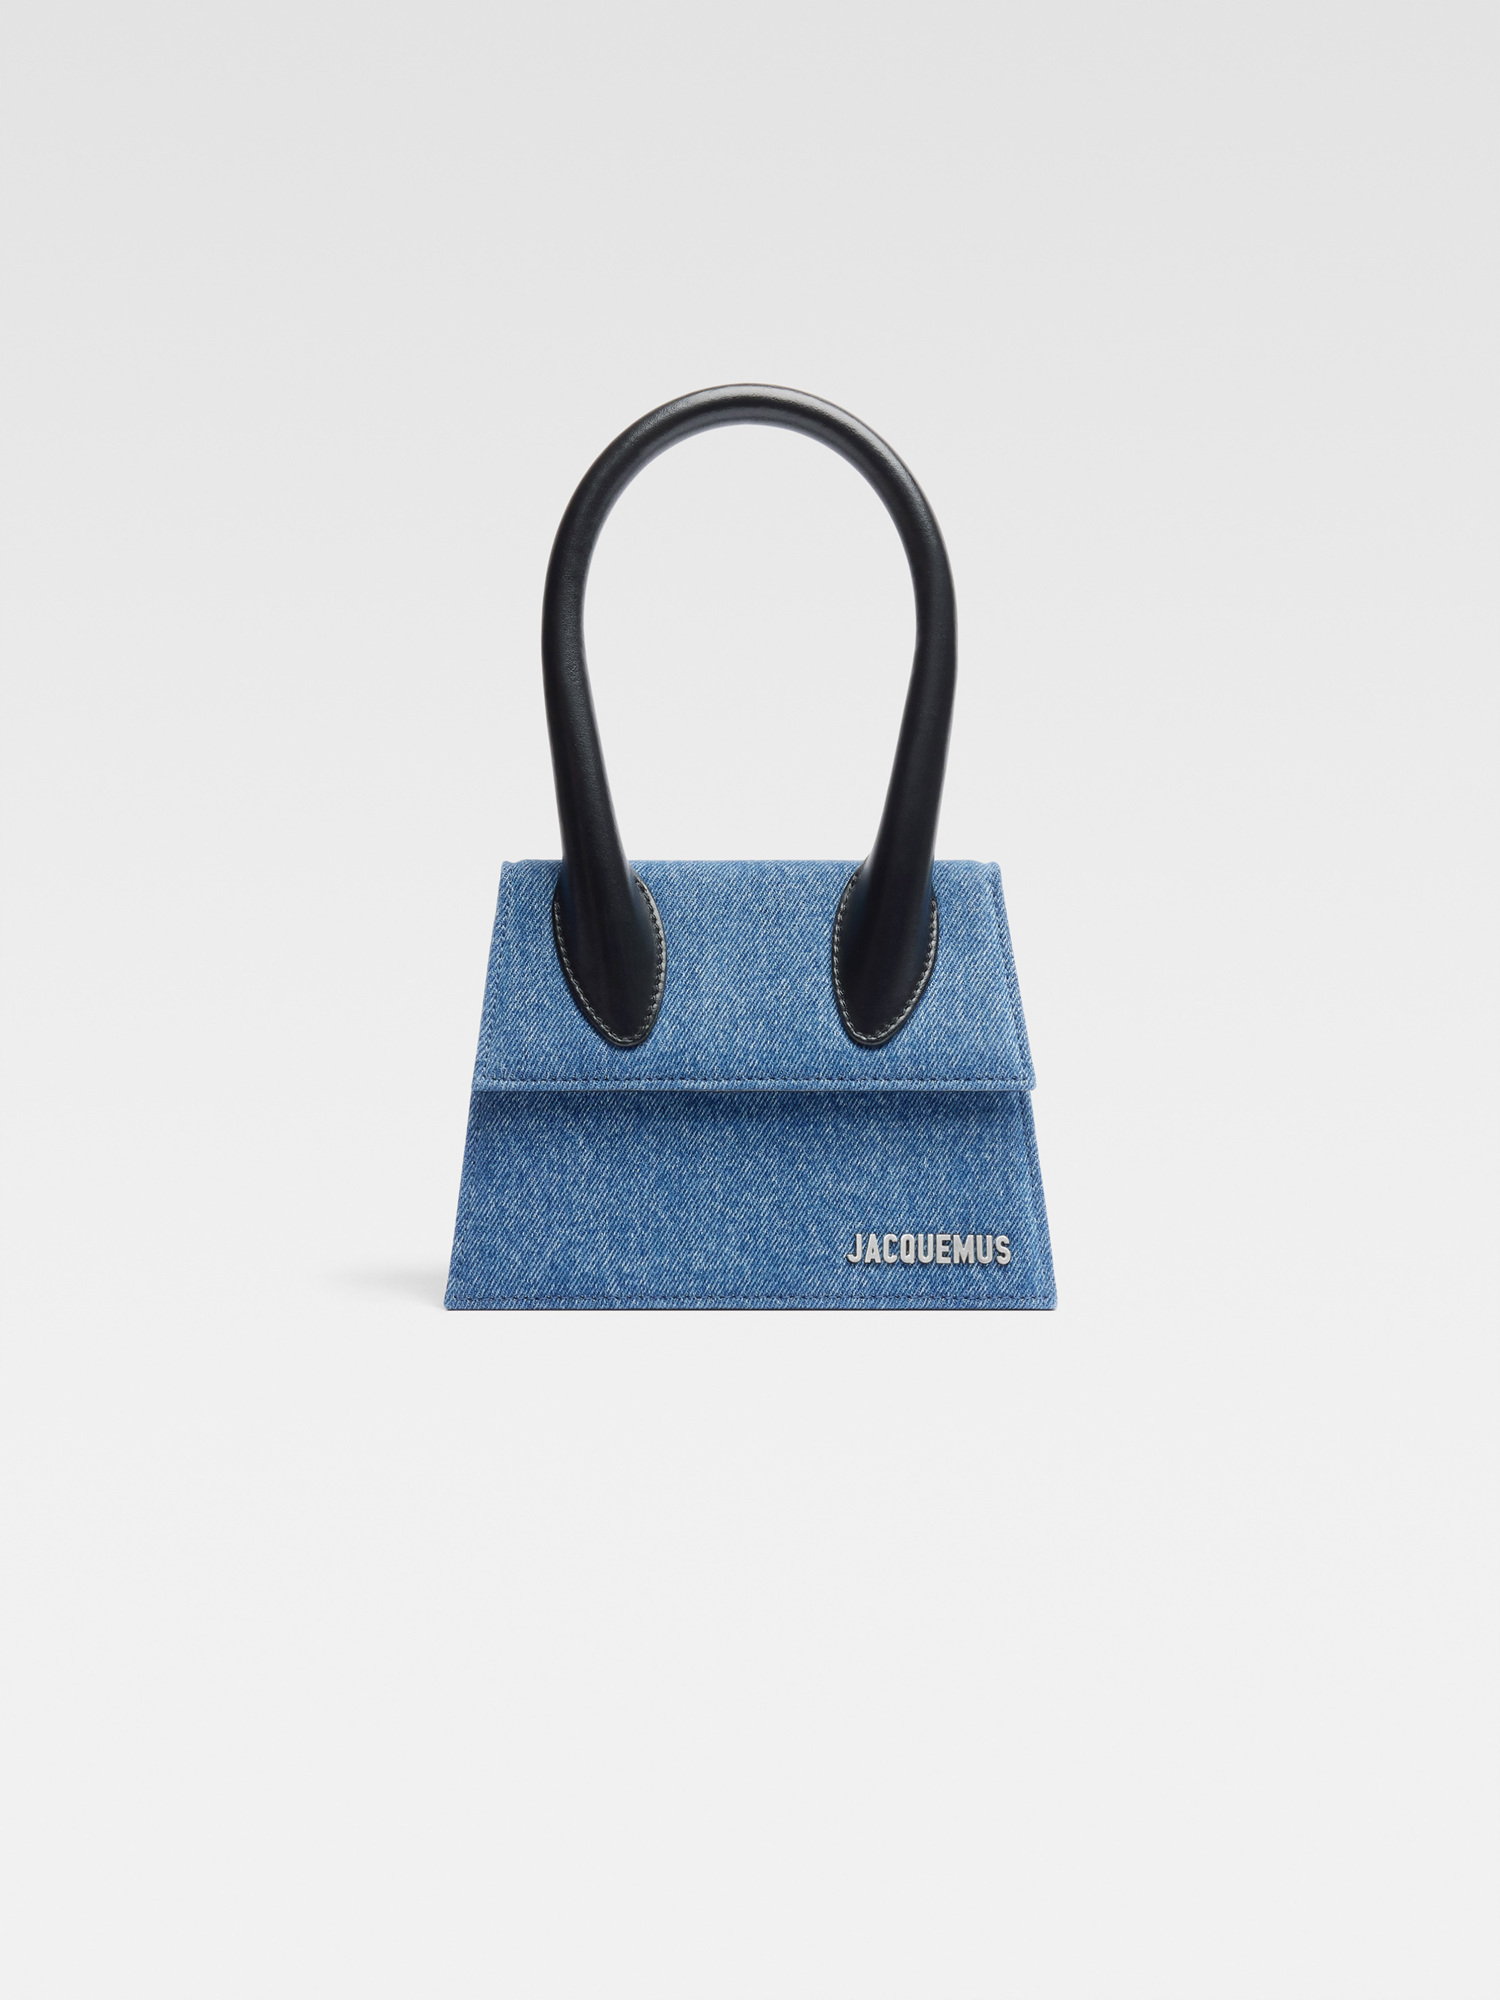 This distinctive Jacquemus bag comes in denim blue.